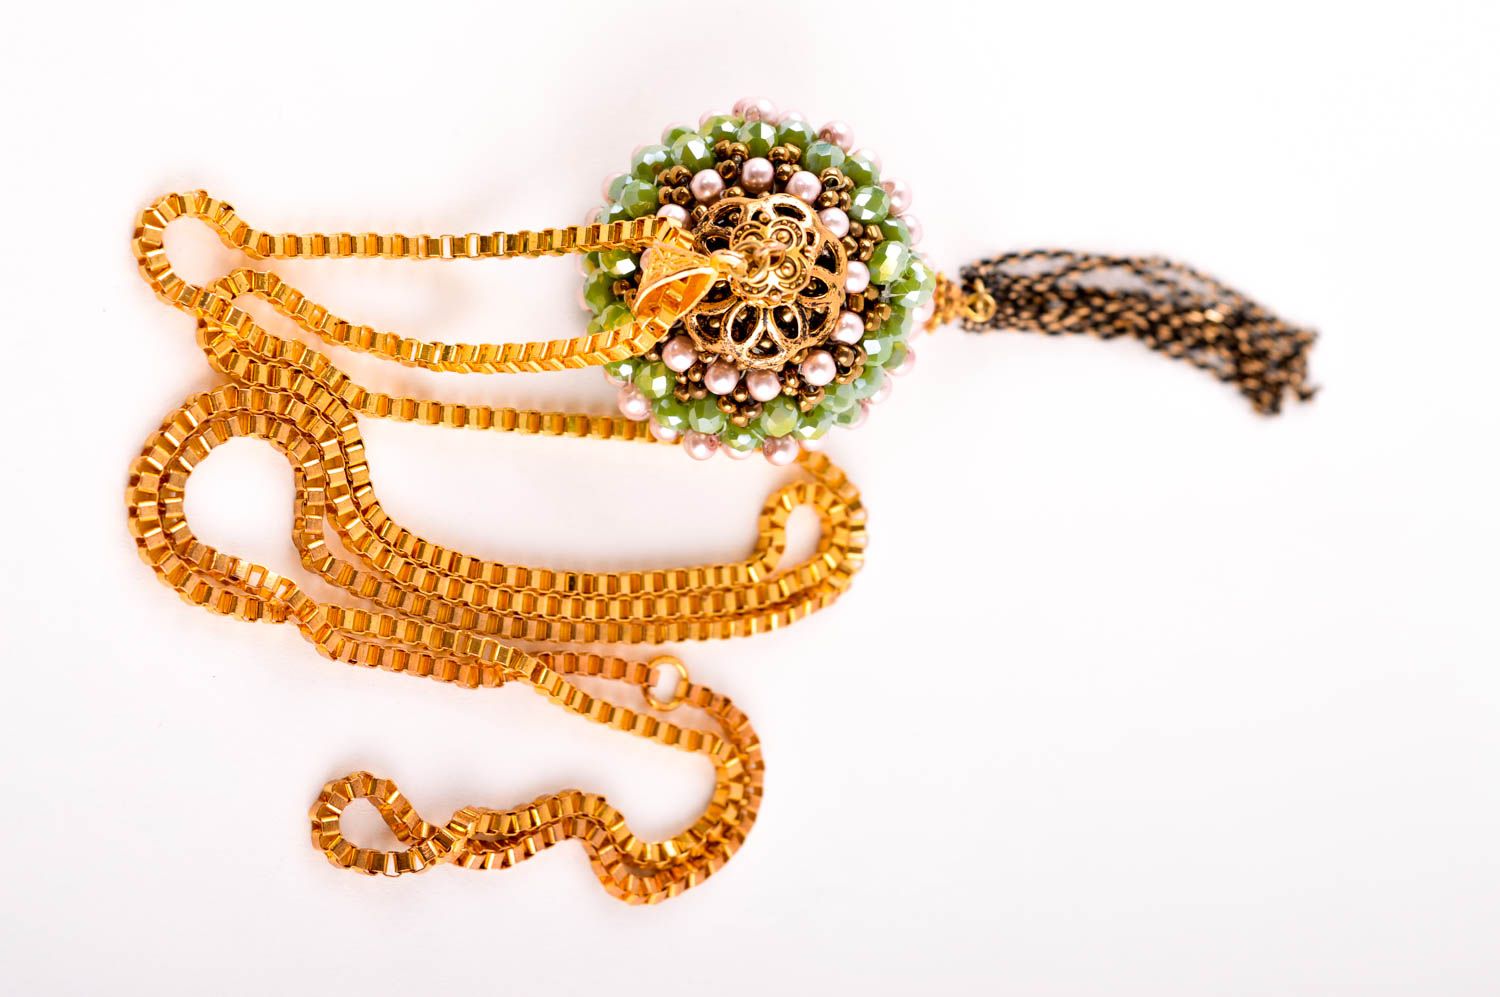 Handmade pendant designer pendant unusual accessory luxury jewelry gift ideas photo 4